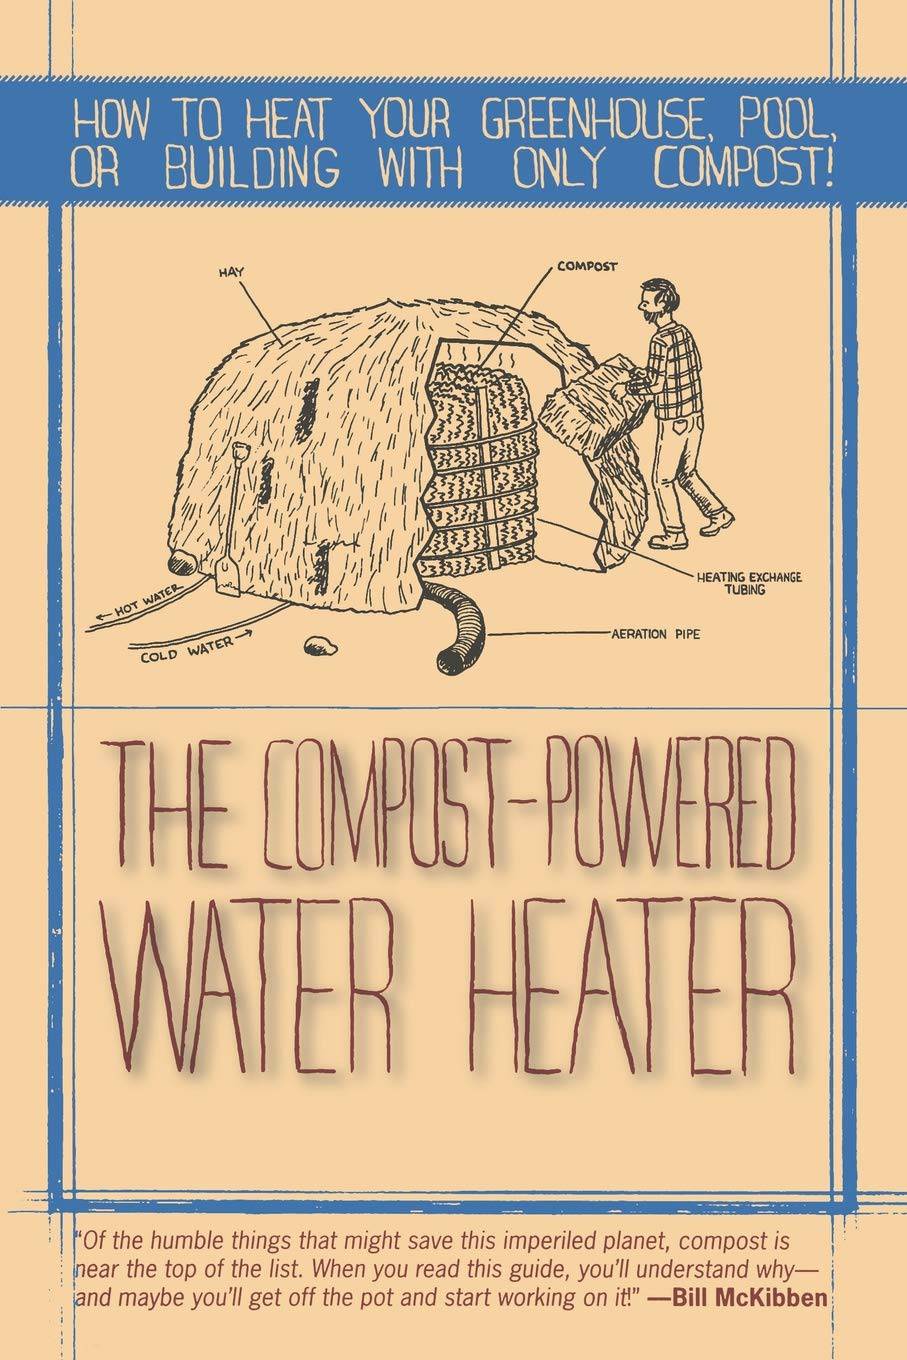 The compost powered water heater by Bill McKibben